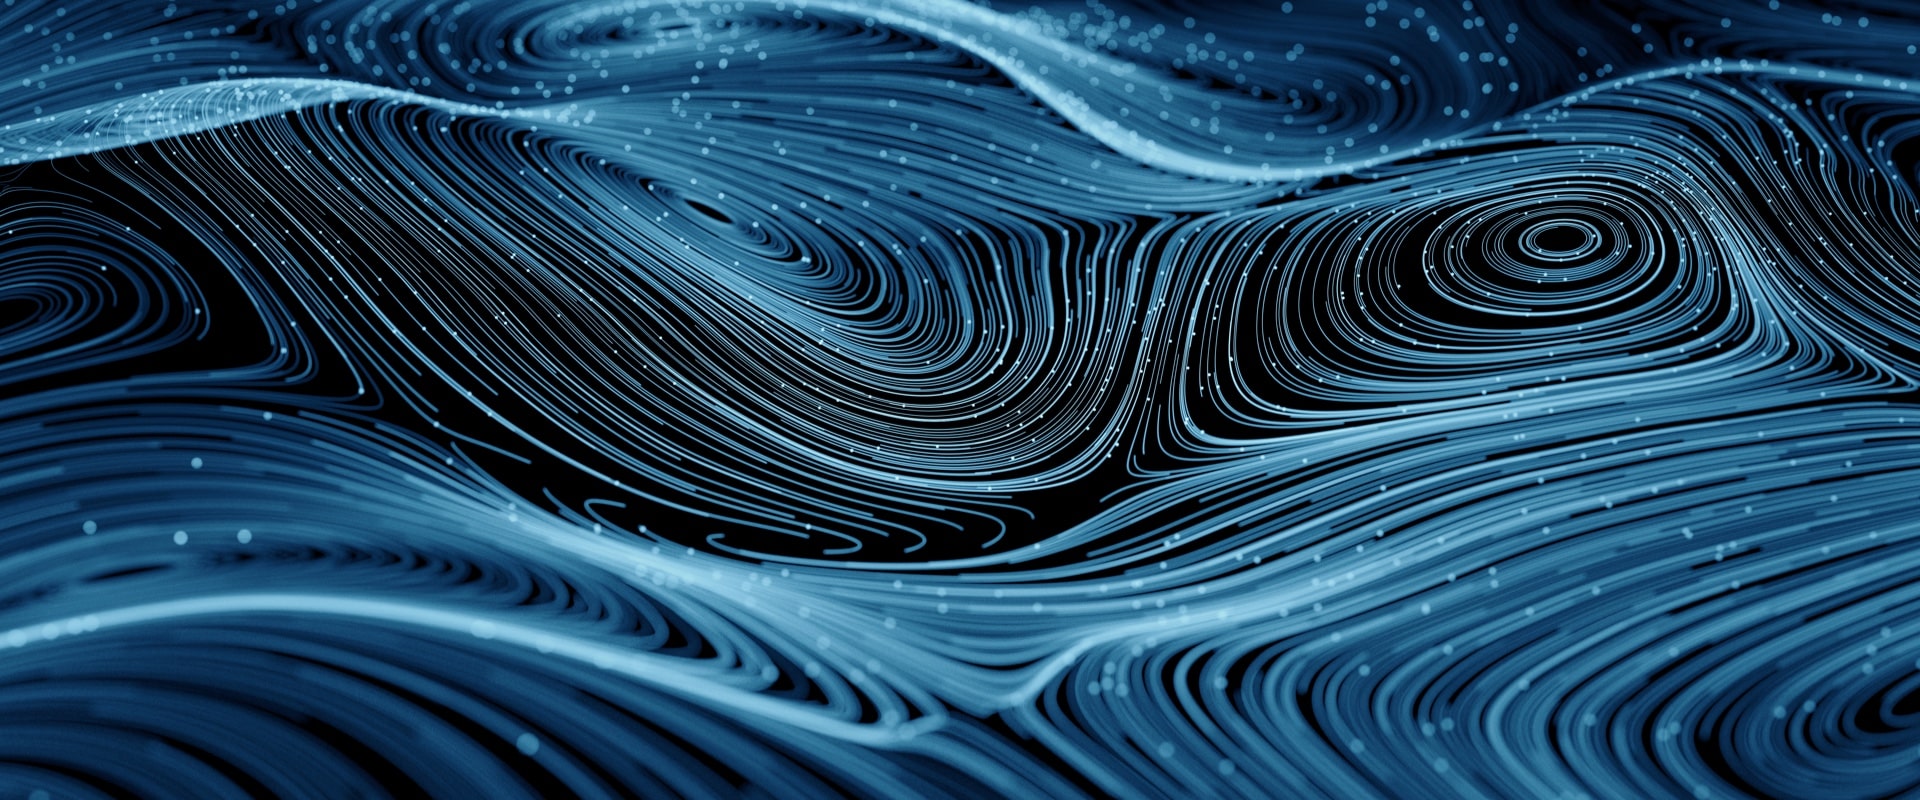 Wavy blue digital lines on a black background